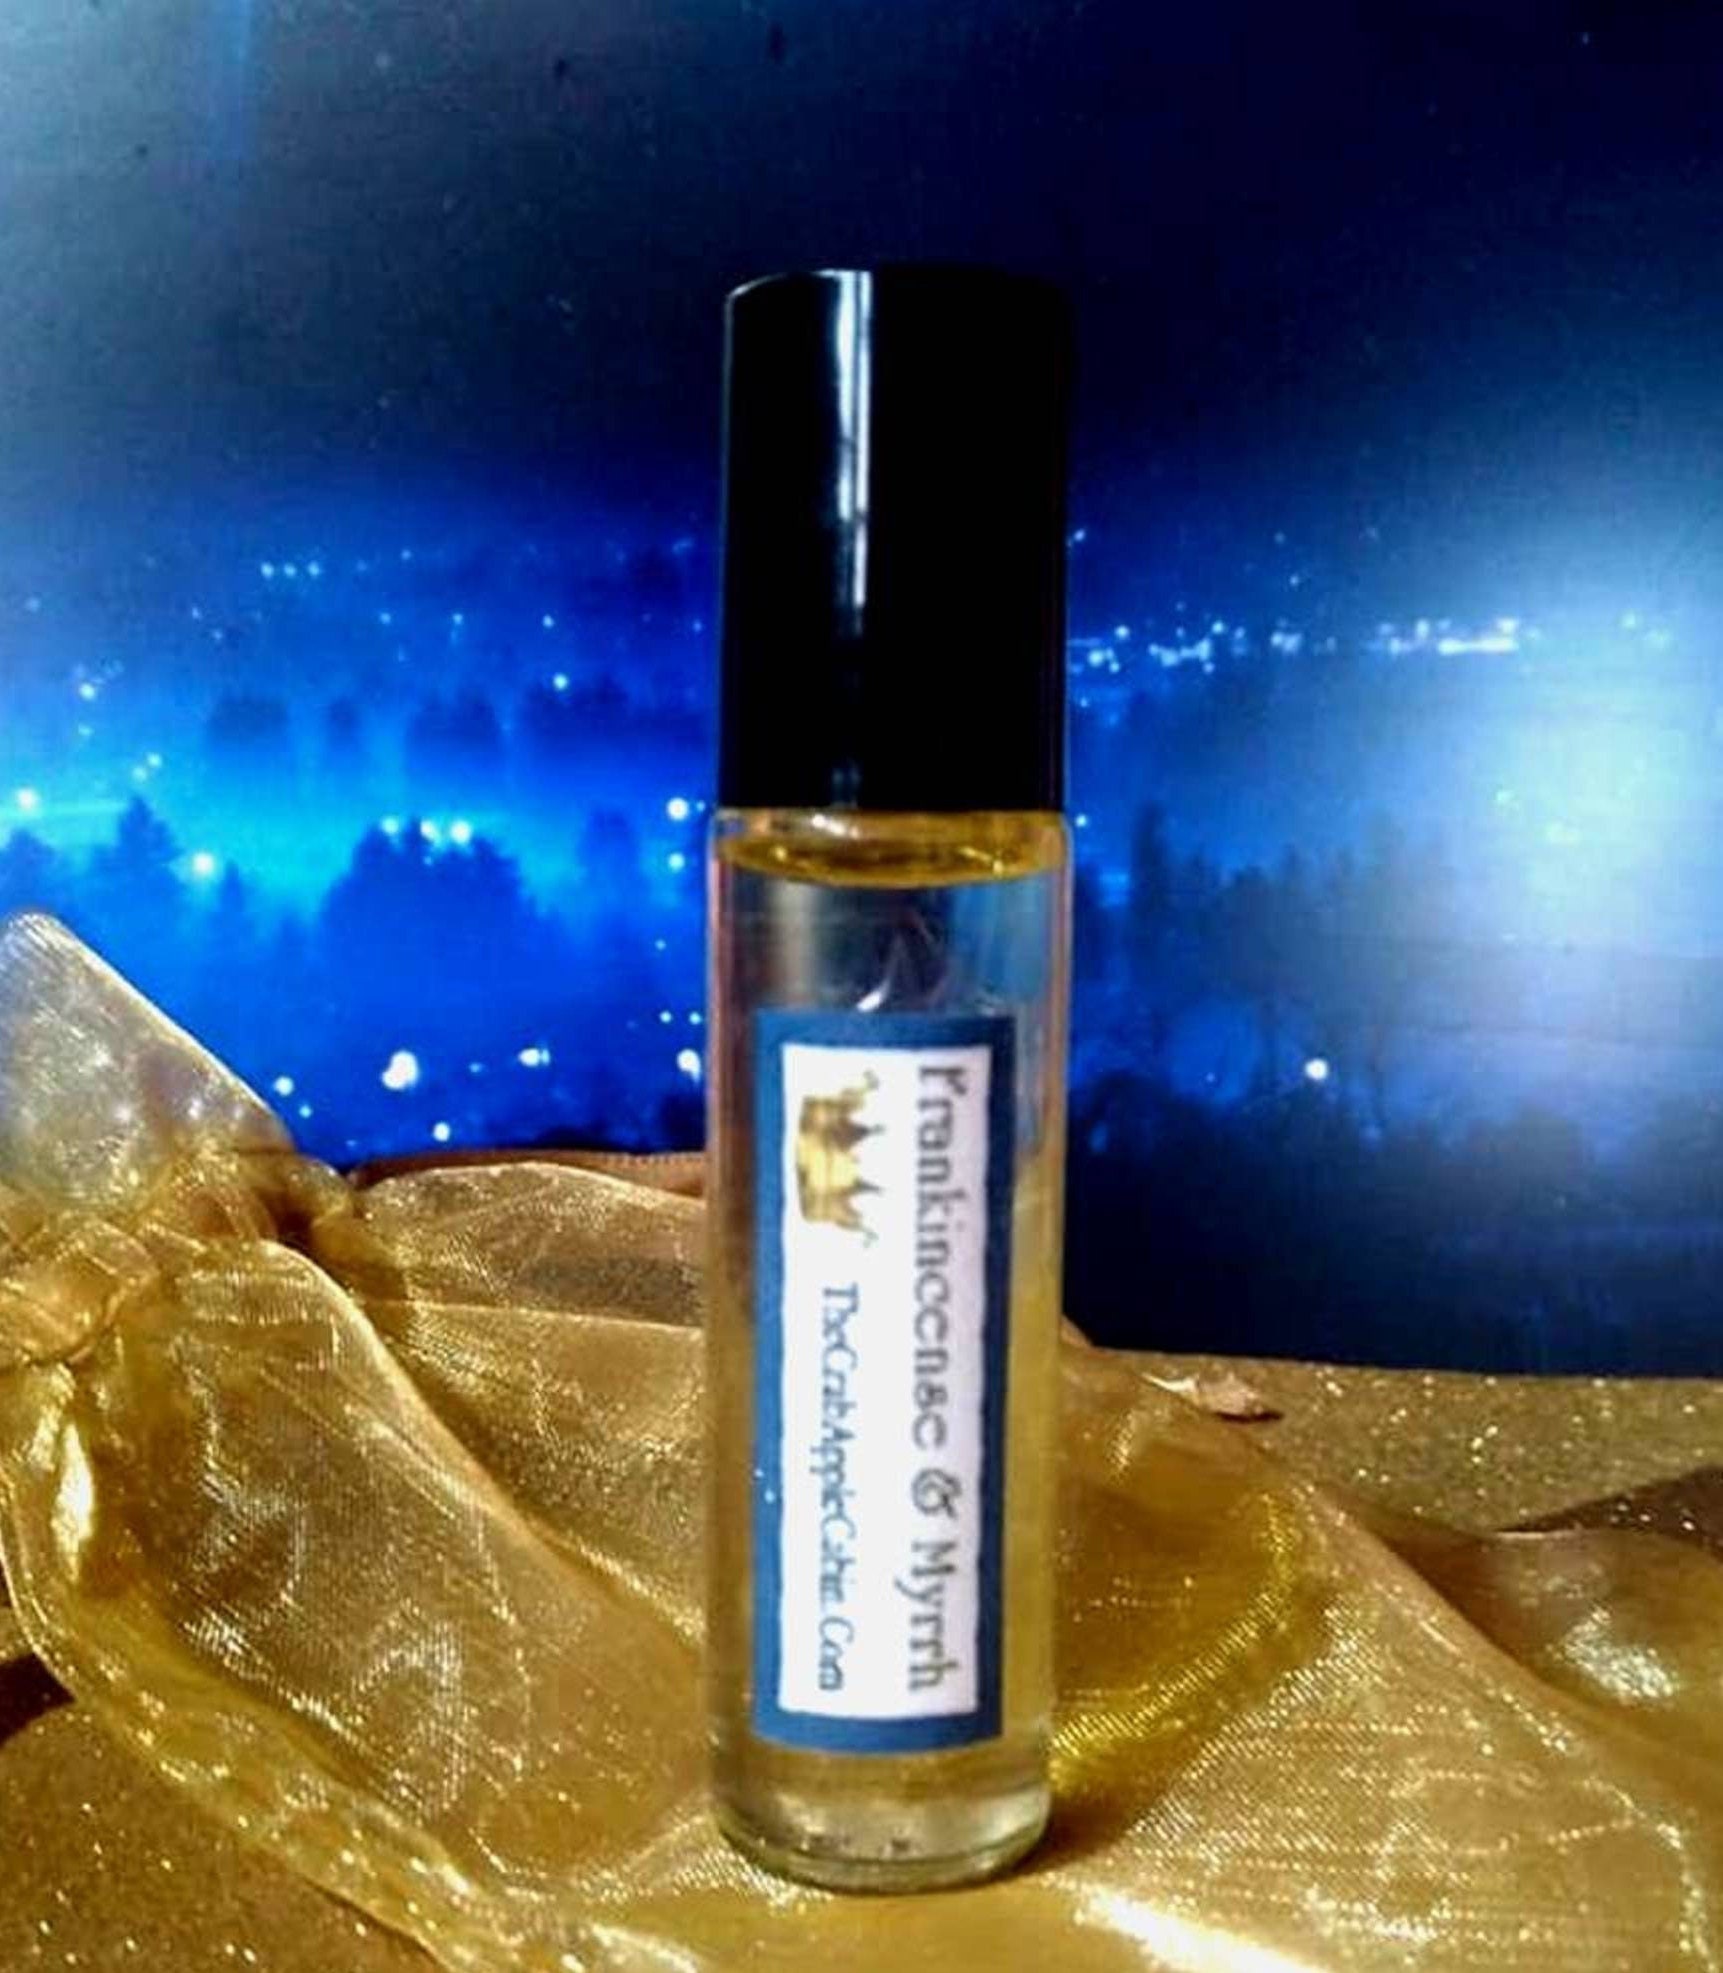 Frankincense and Myrrh Fragrance Oil 